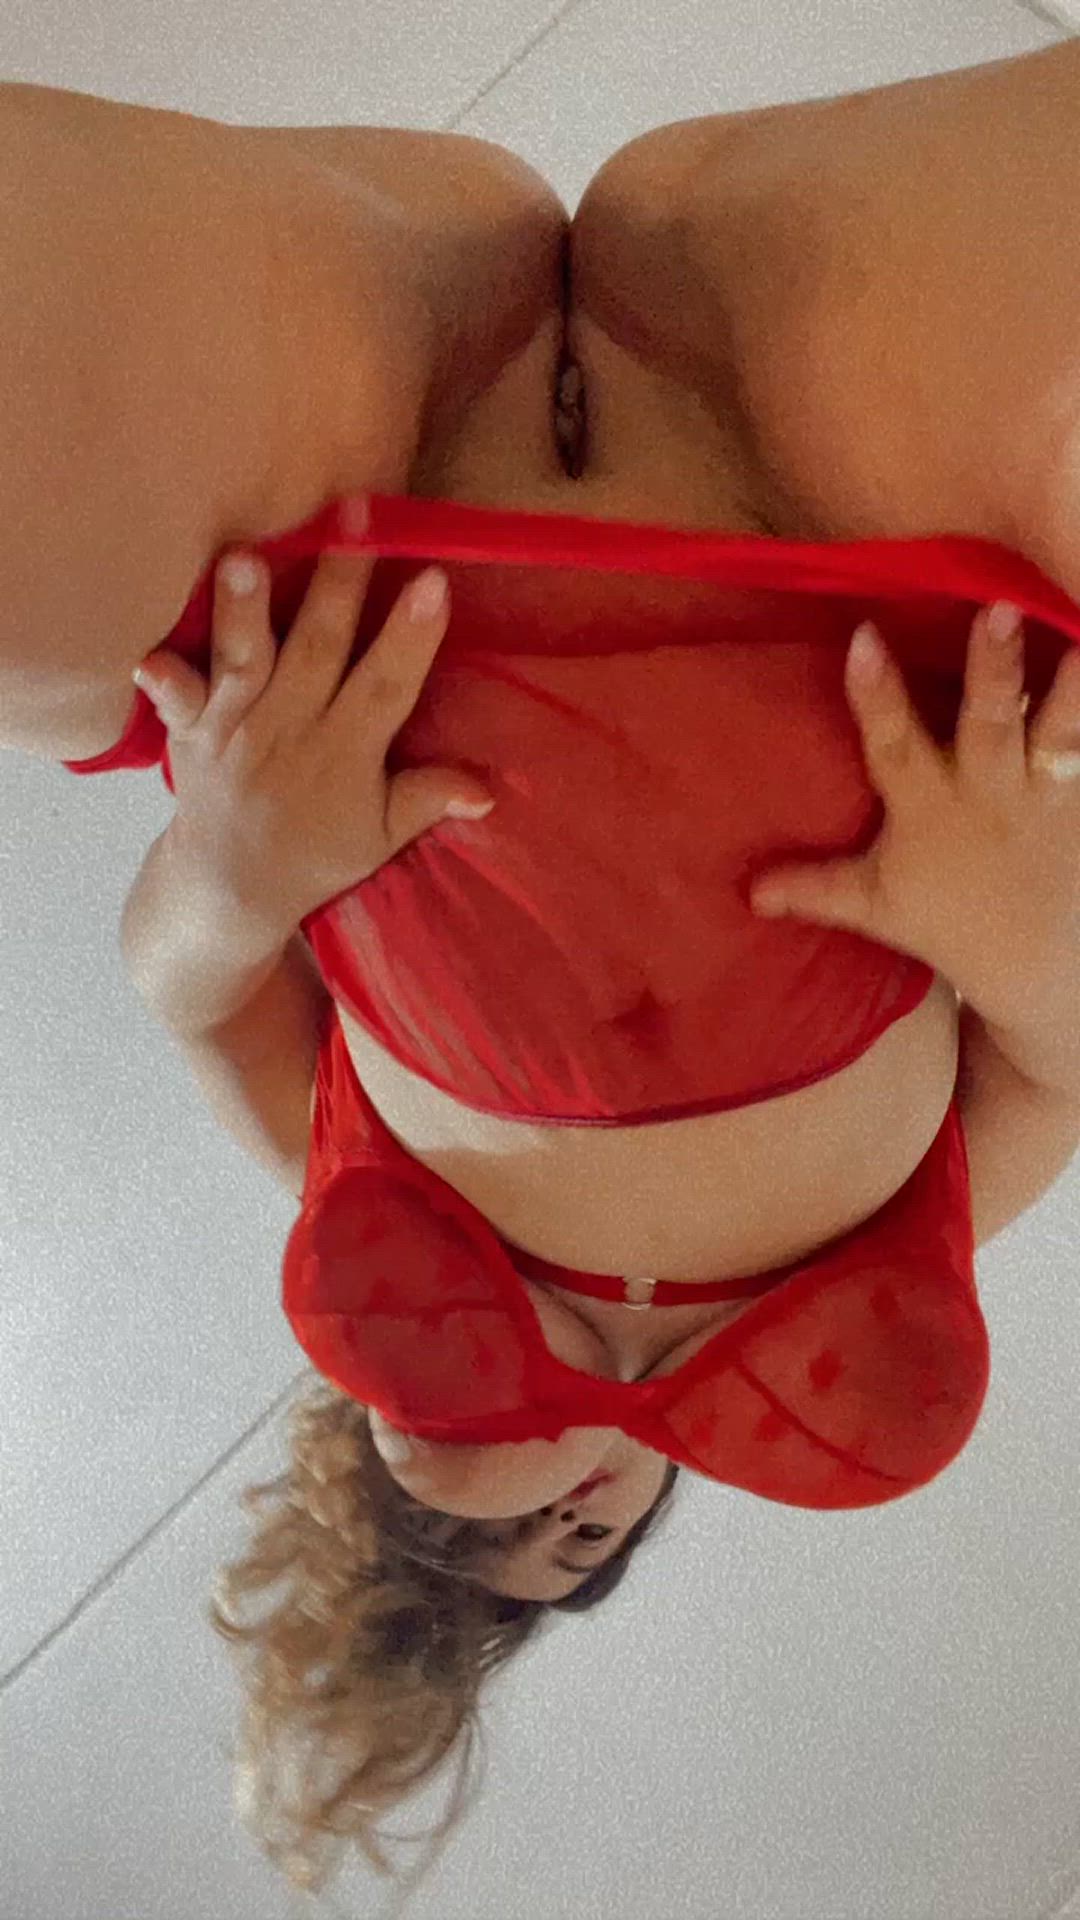 Tits porn video with onlyfans model xxxdenissexxx <strong>@xxxdenissexxx</strong>